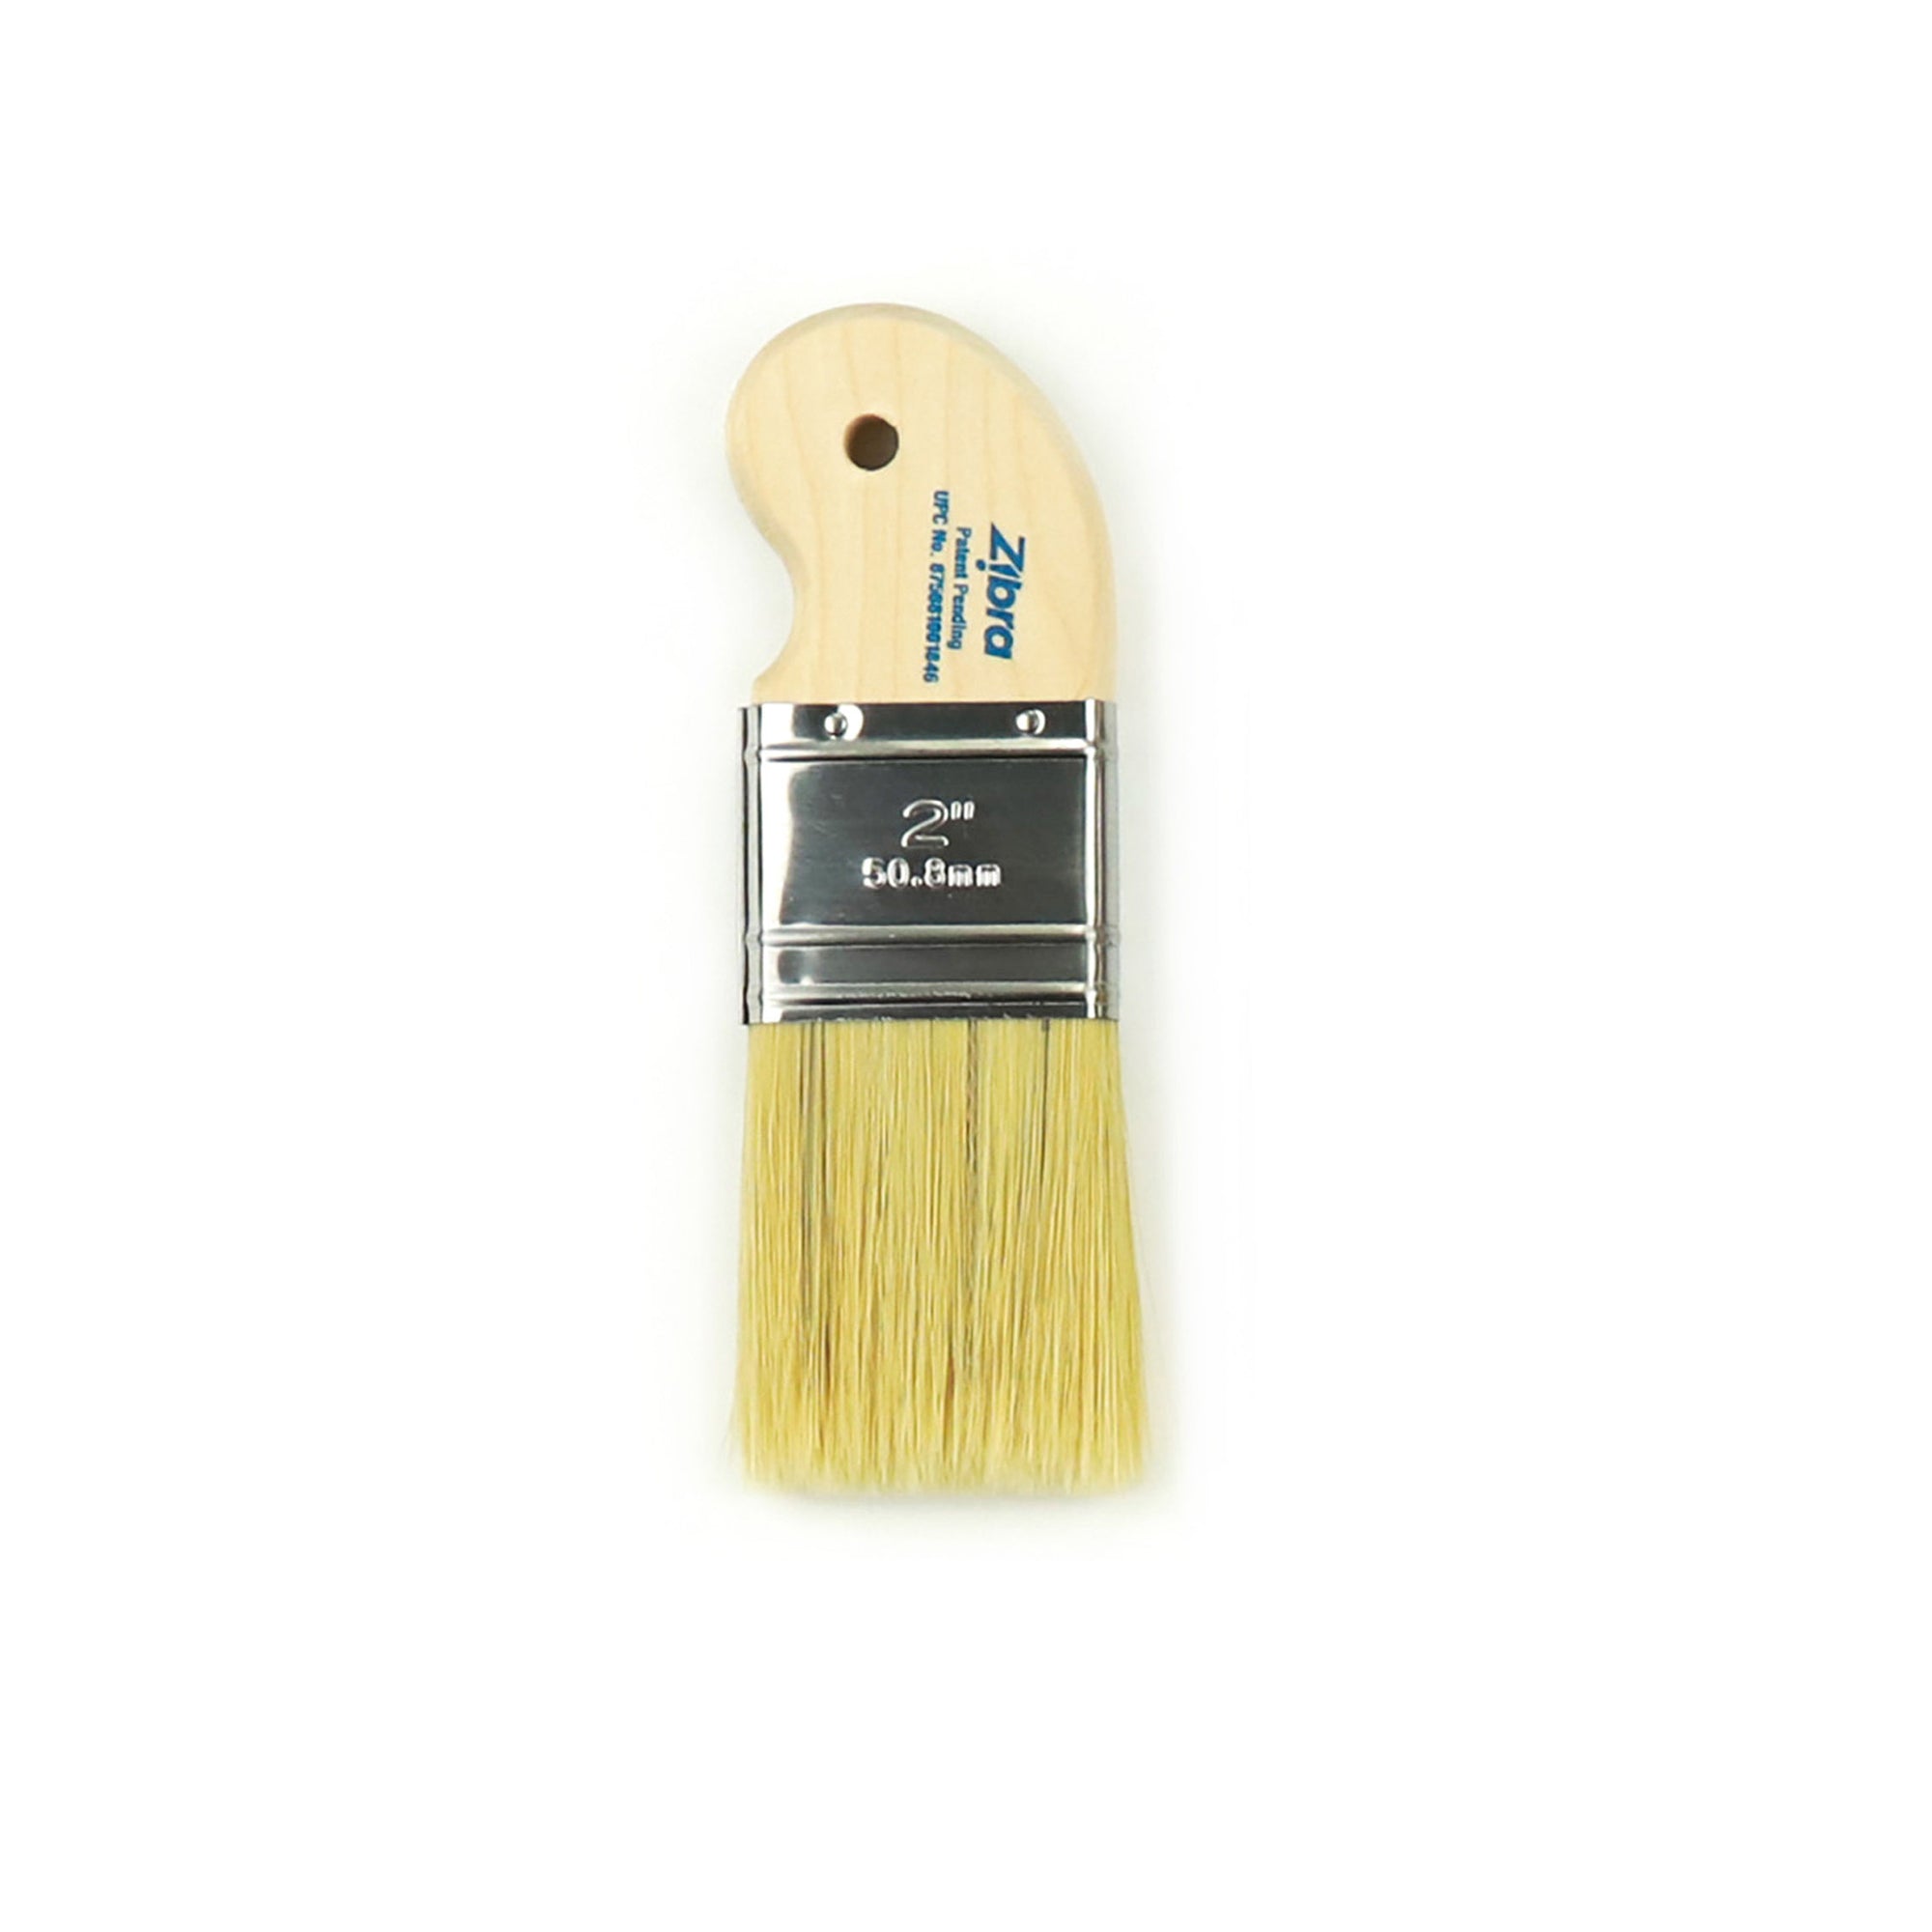  4 inch European Professional Flat Paint Brush